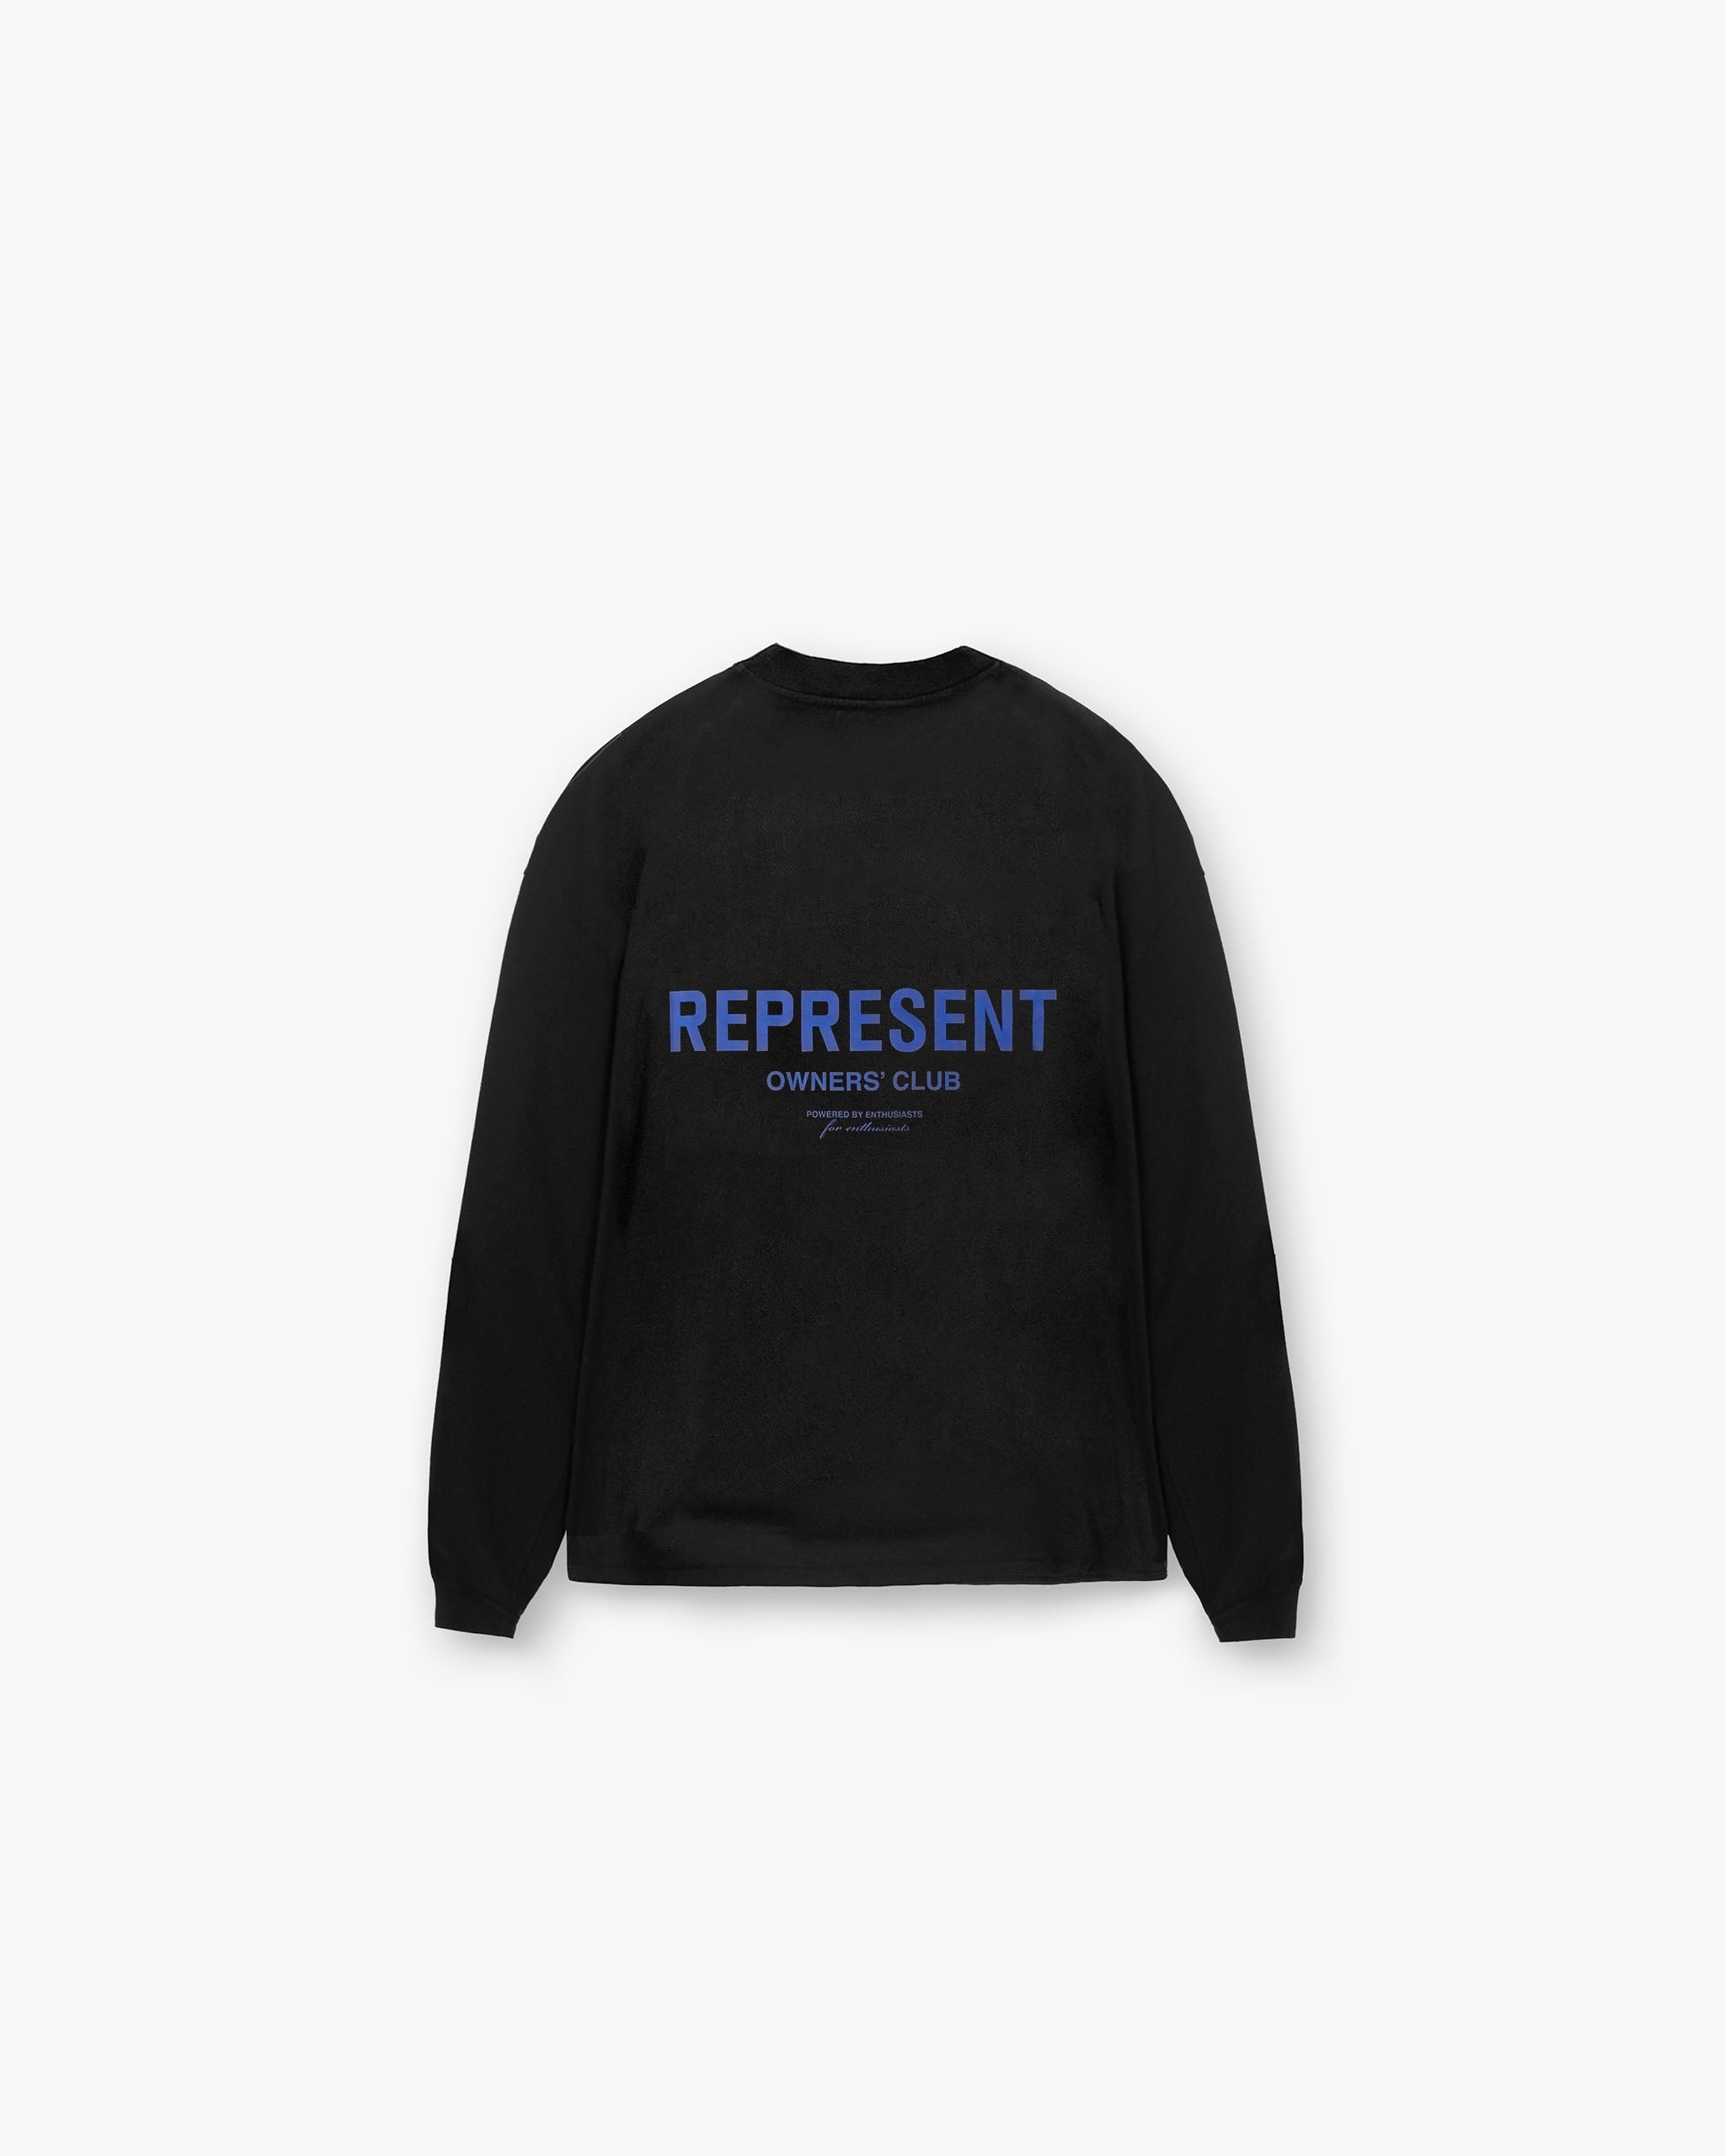 Represent Owners Club Long Sleeve T-Shirt - Black Cobalt